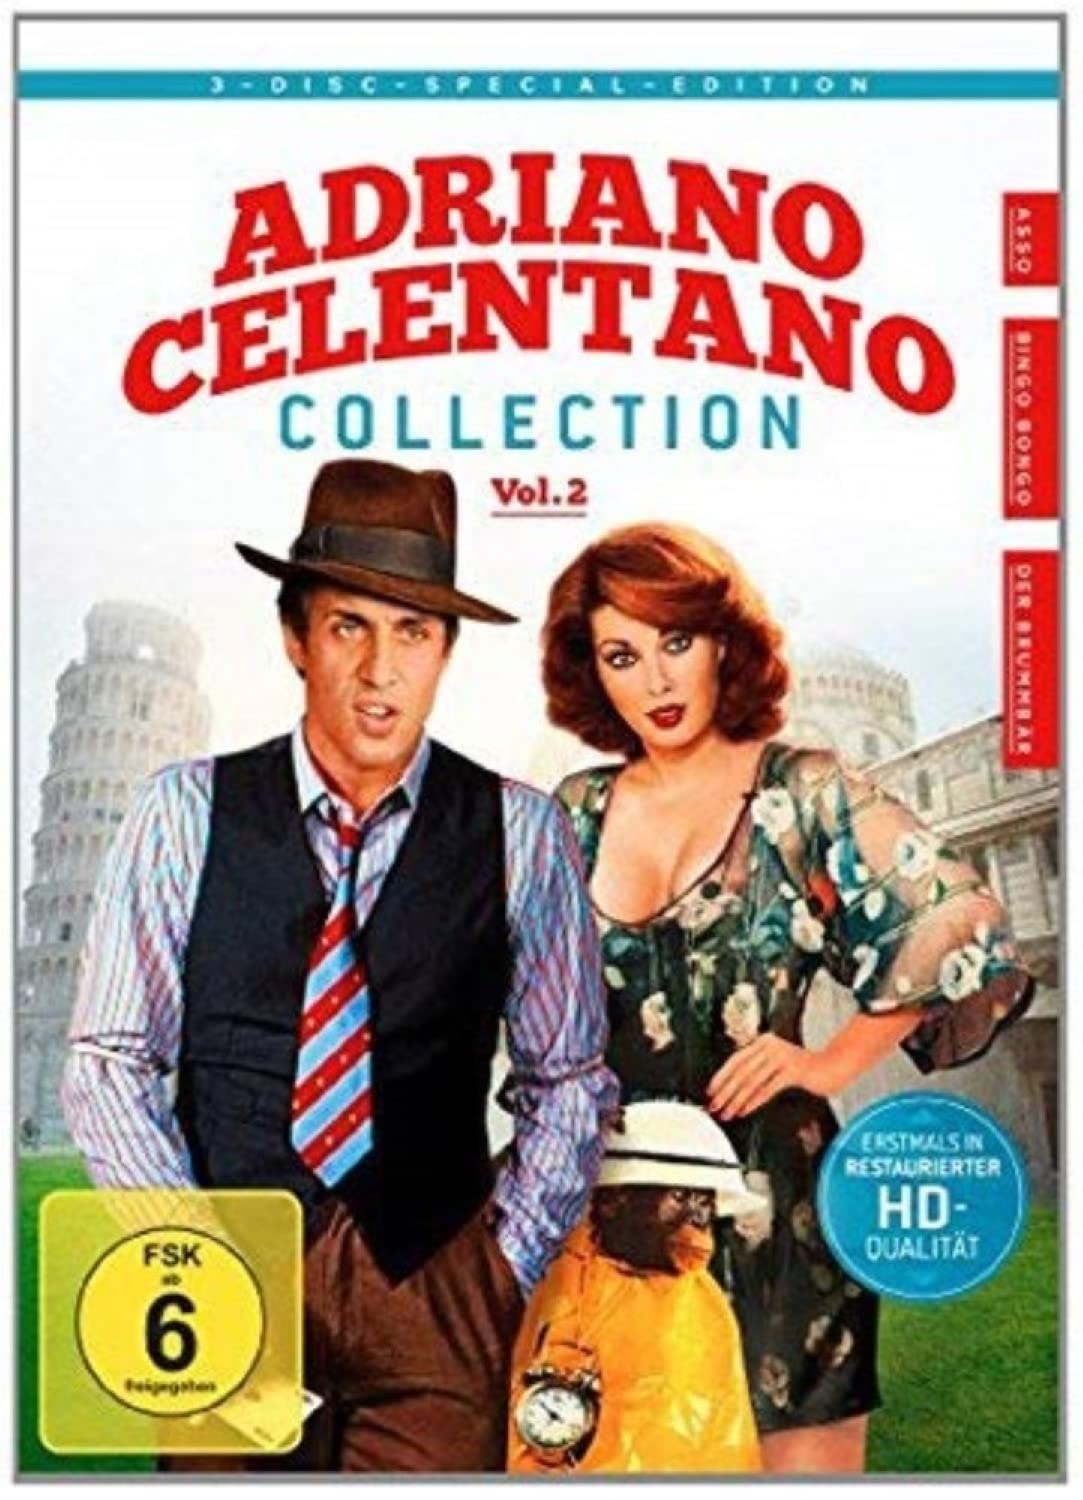 Adriano Celentano - Collection Vol. 2 [Special Edition] [3 DVDs]